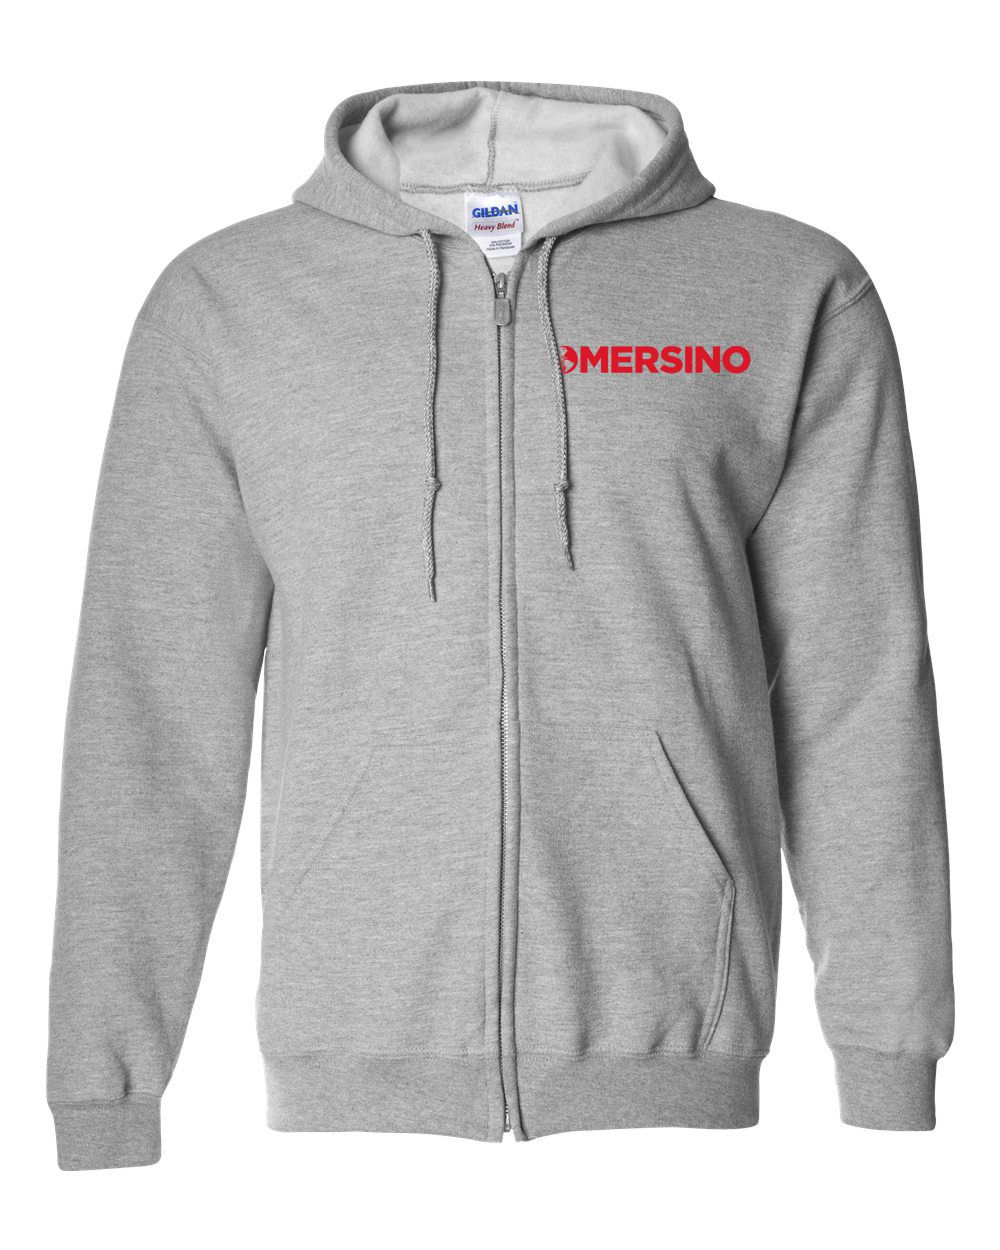 Mersino Hooded Full Zip Jacket